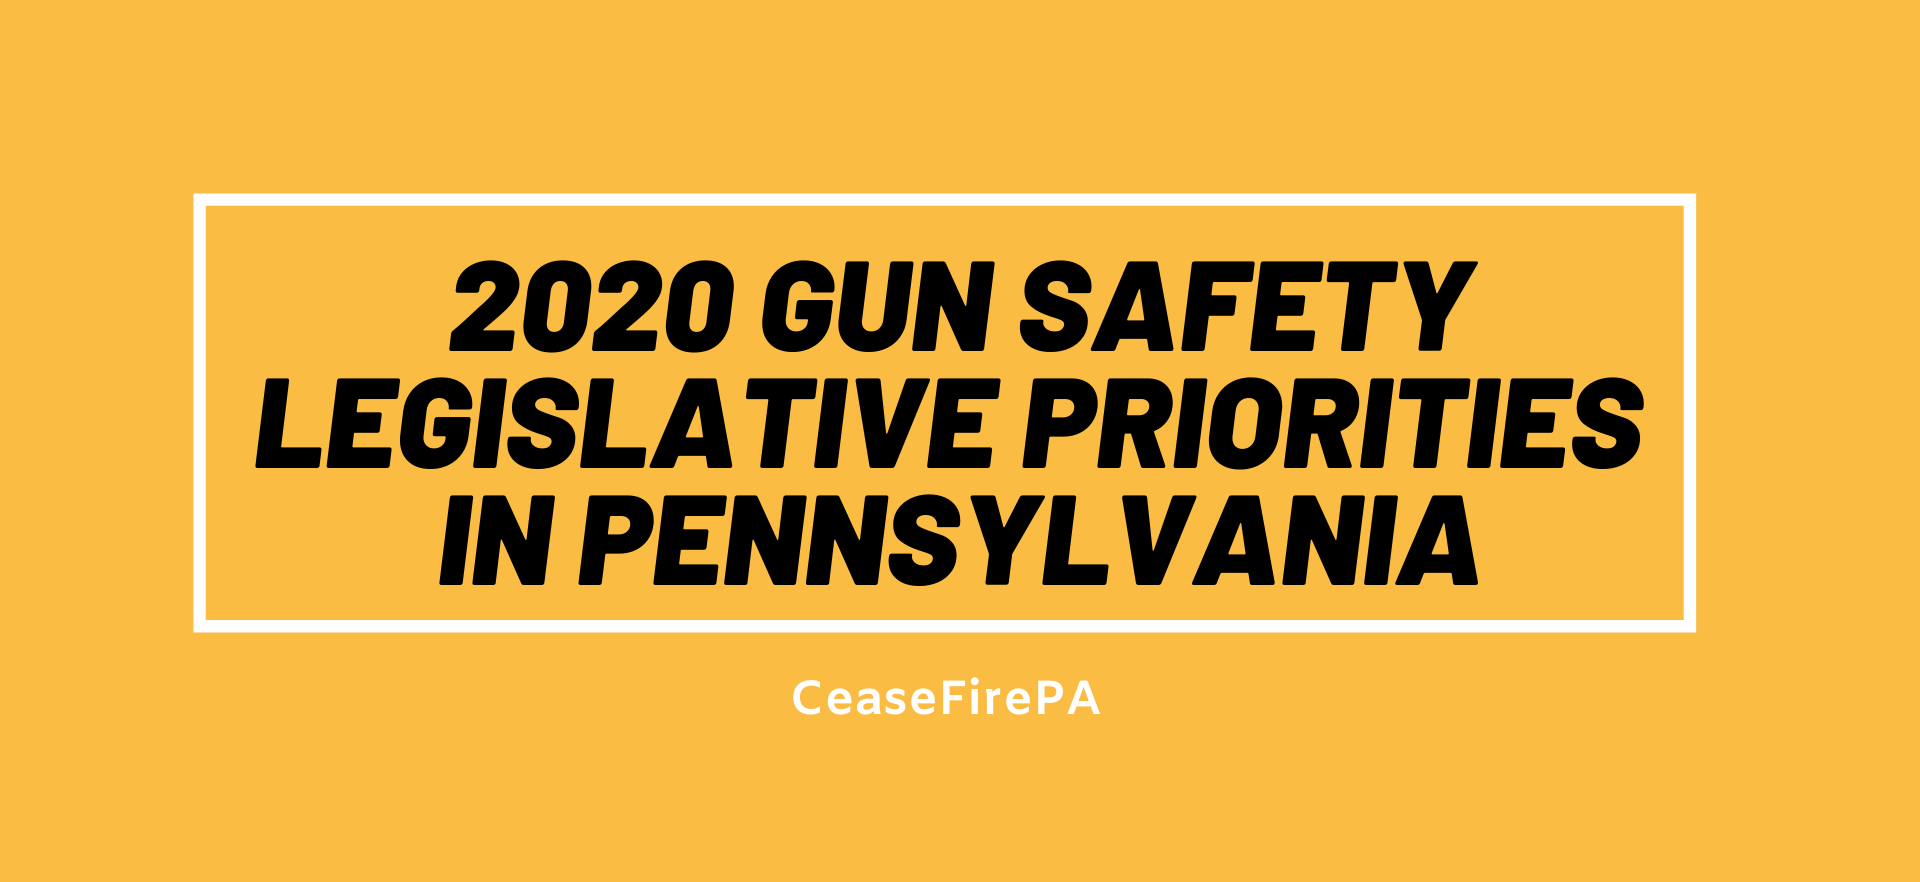 2020 Gun Safety Legislative Priorities in Pennsylvania